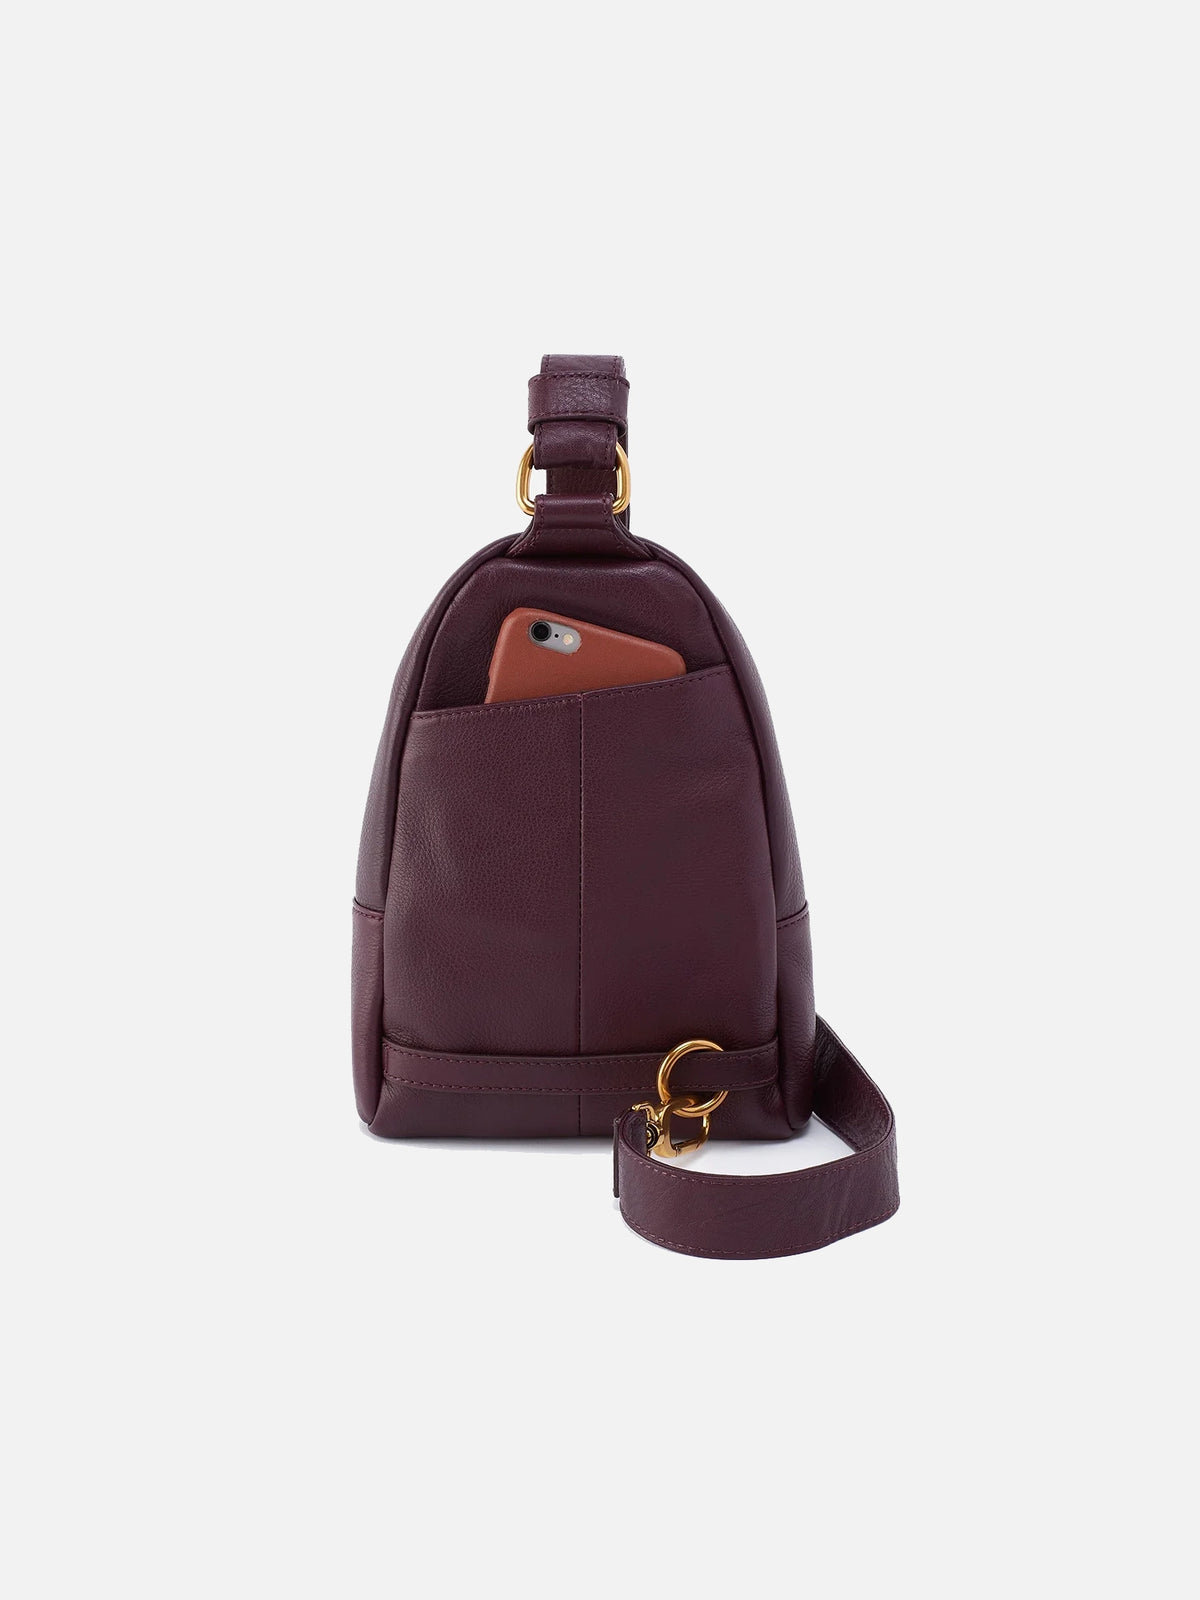 hobo fern sling bag in ruby wine pebbled leather